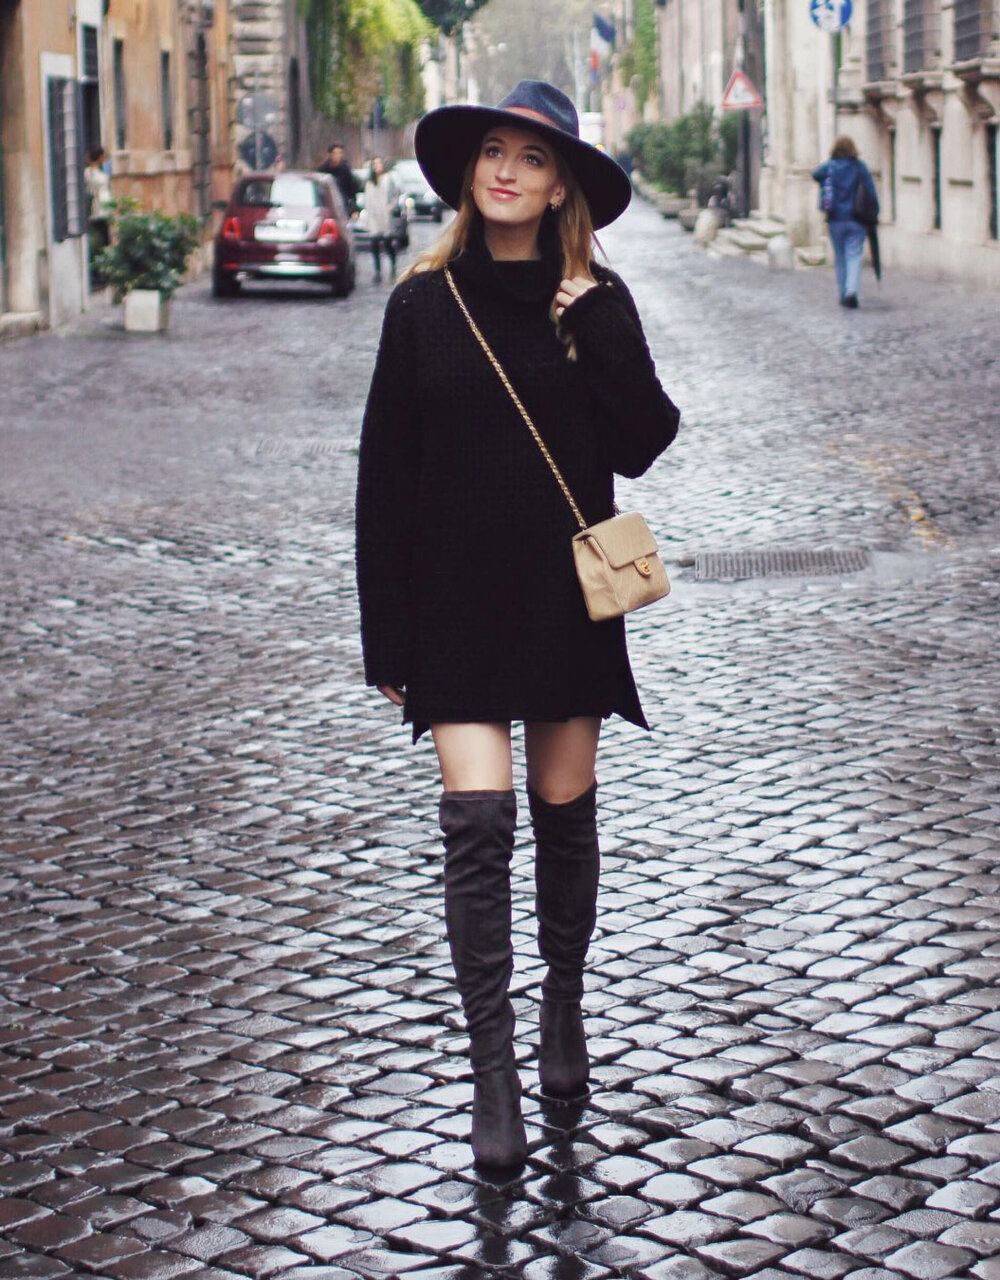 black-dress-sweater-tan-bag-hat-hairr-black-shoe-boots-otk-fall-winter-italy-lunch.jpg